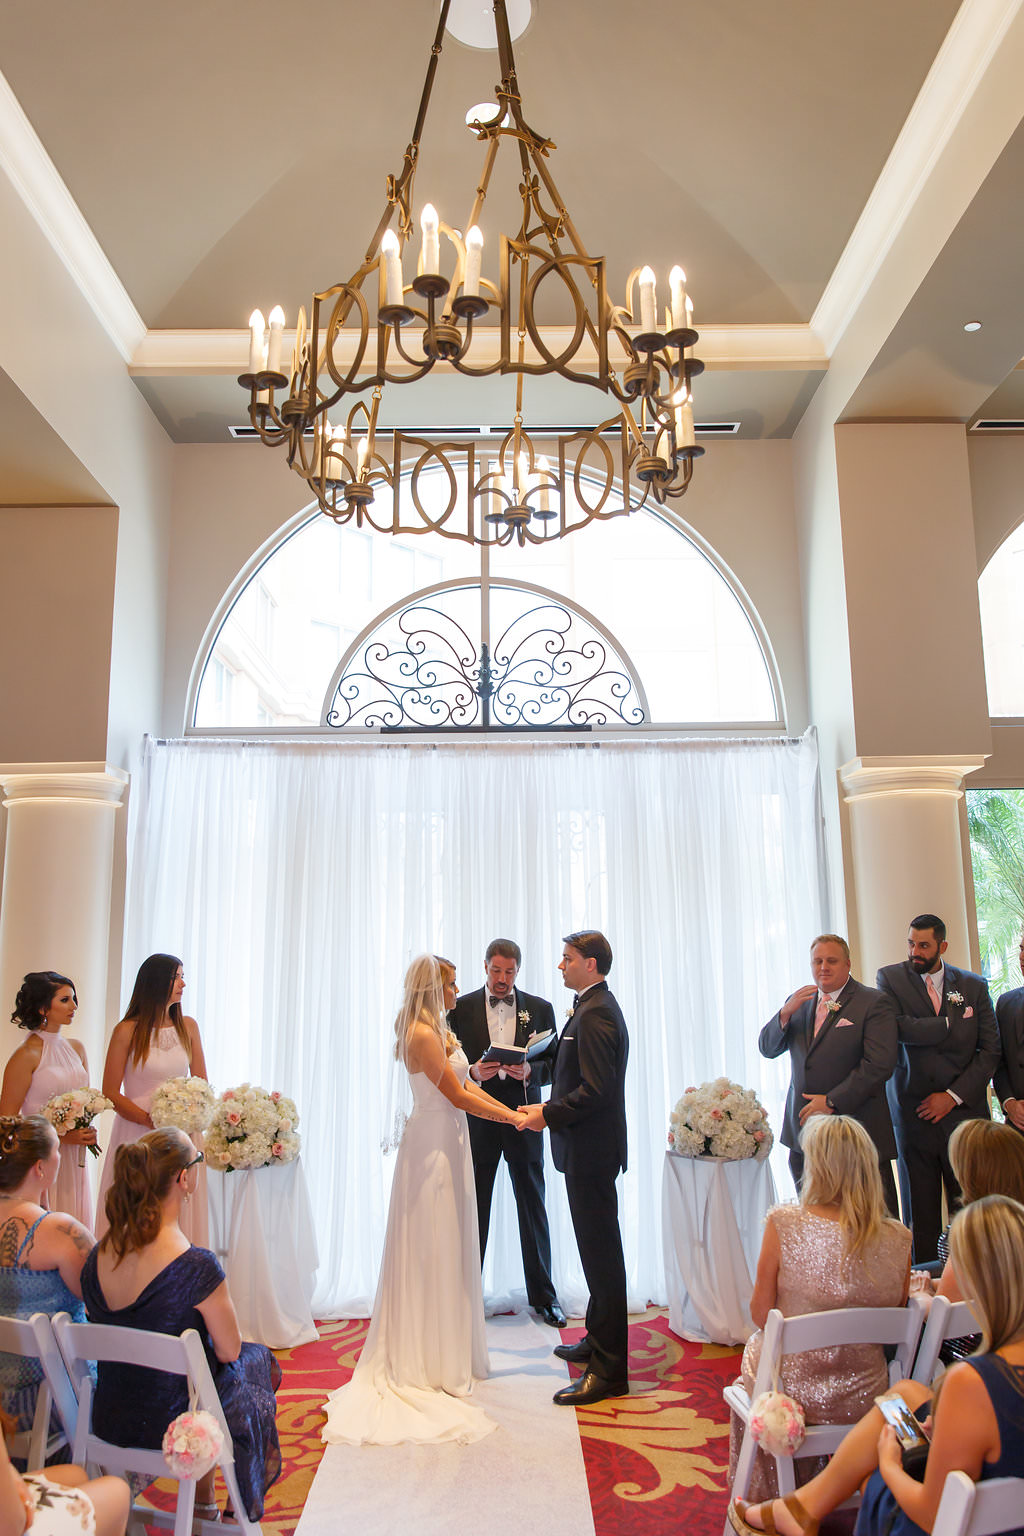 Indoor Hotel Wedding Ceremony Portrait | Hotel Wedding Venue The Tampa Renaissance